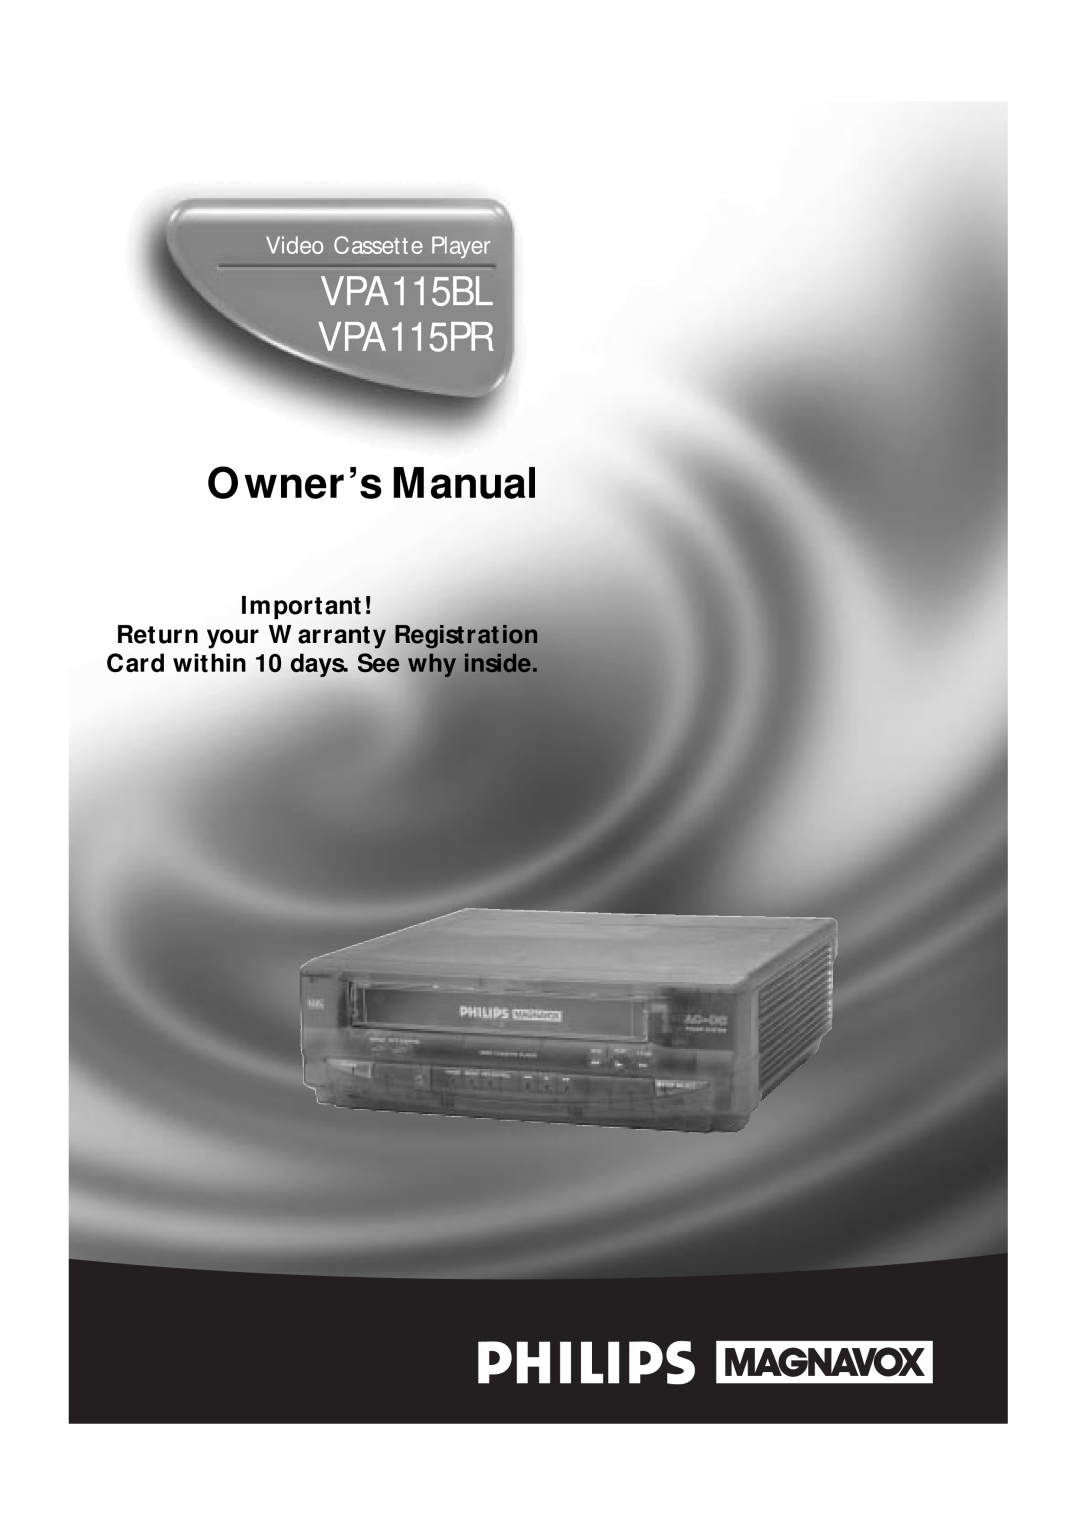 Philips owner manual VPA115BL VPA115PR, Video Cassette Player 